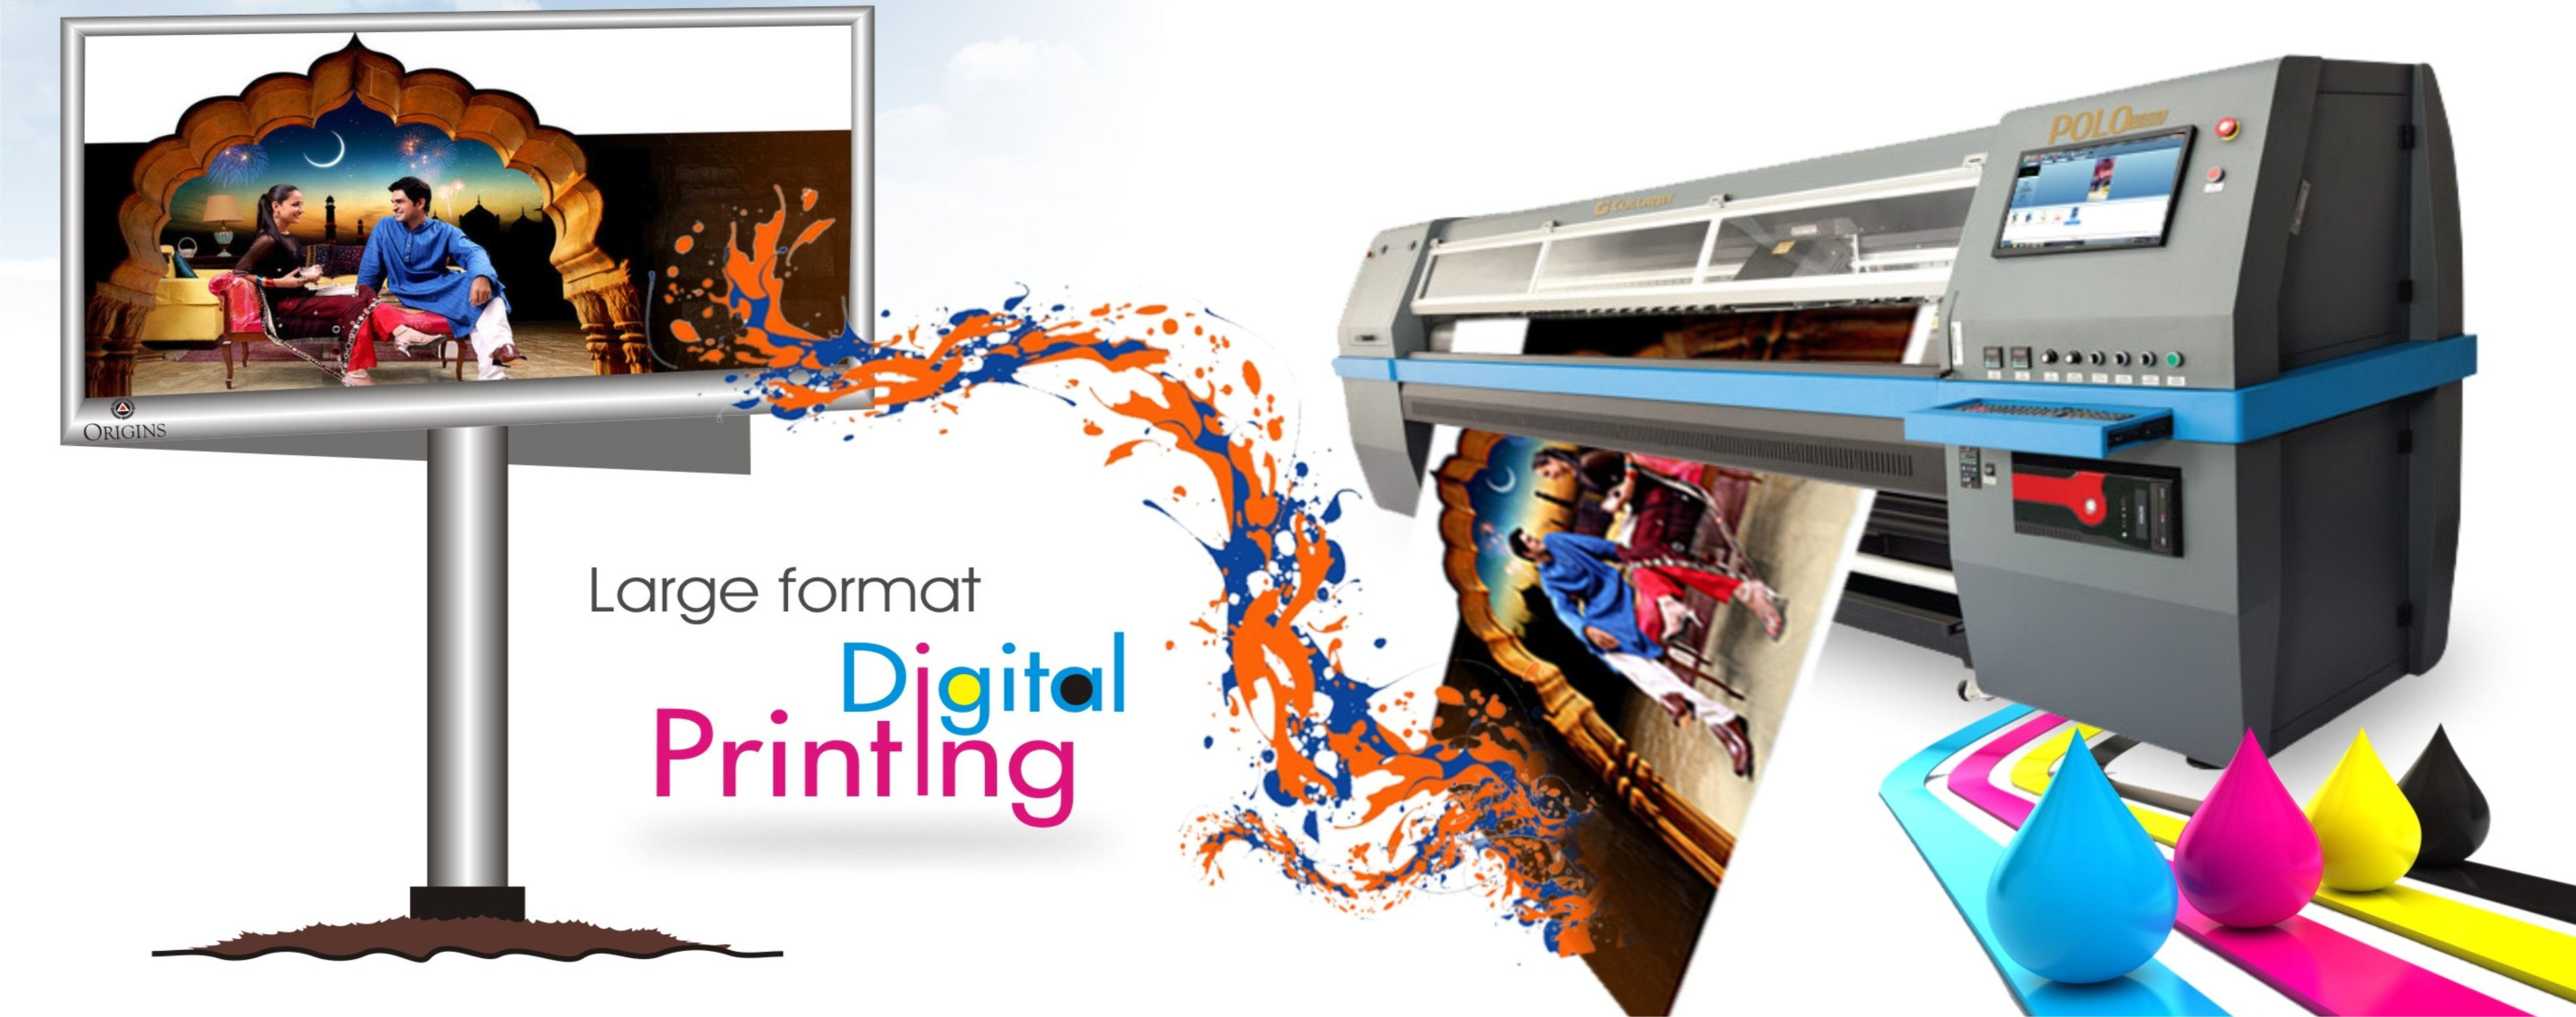 Digital Printing Market'